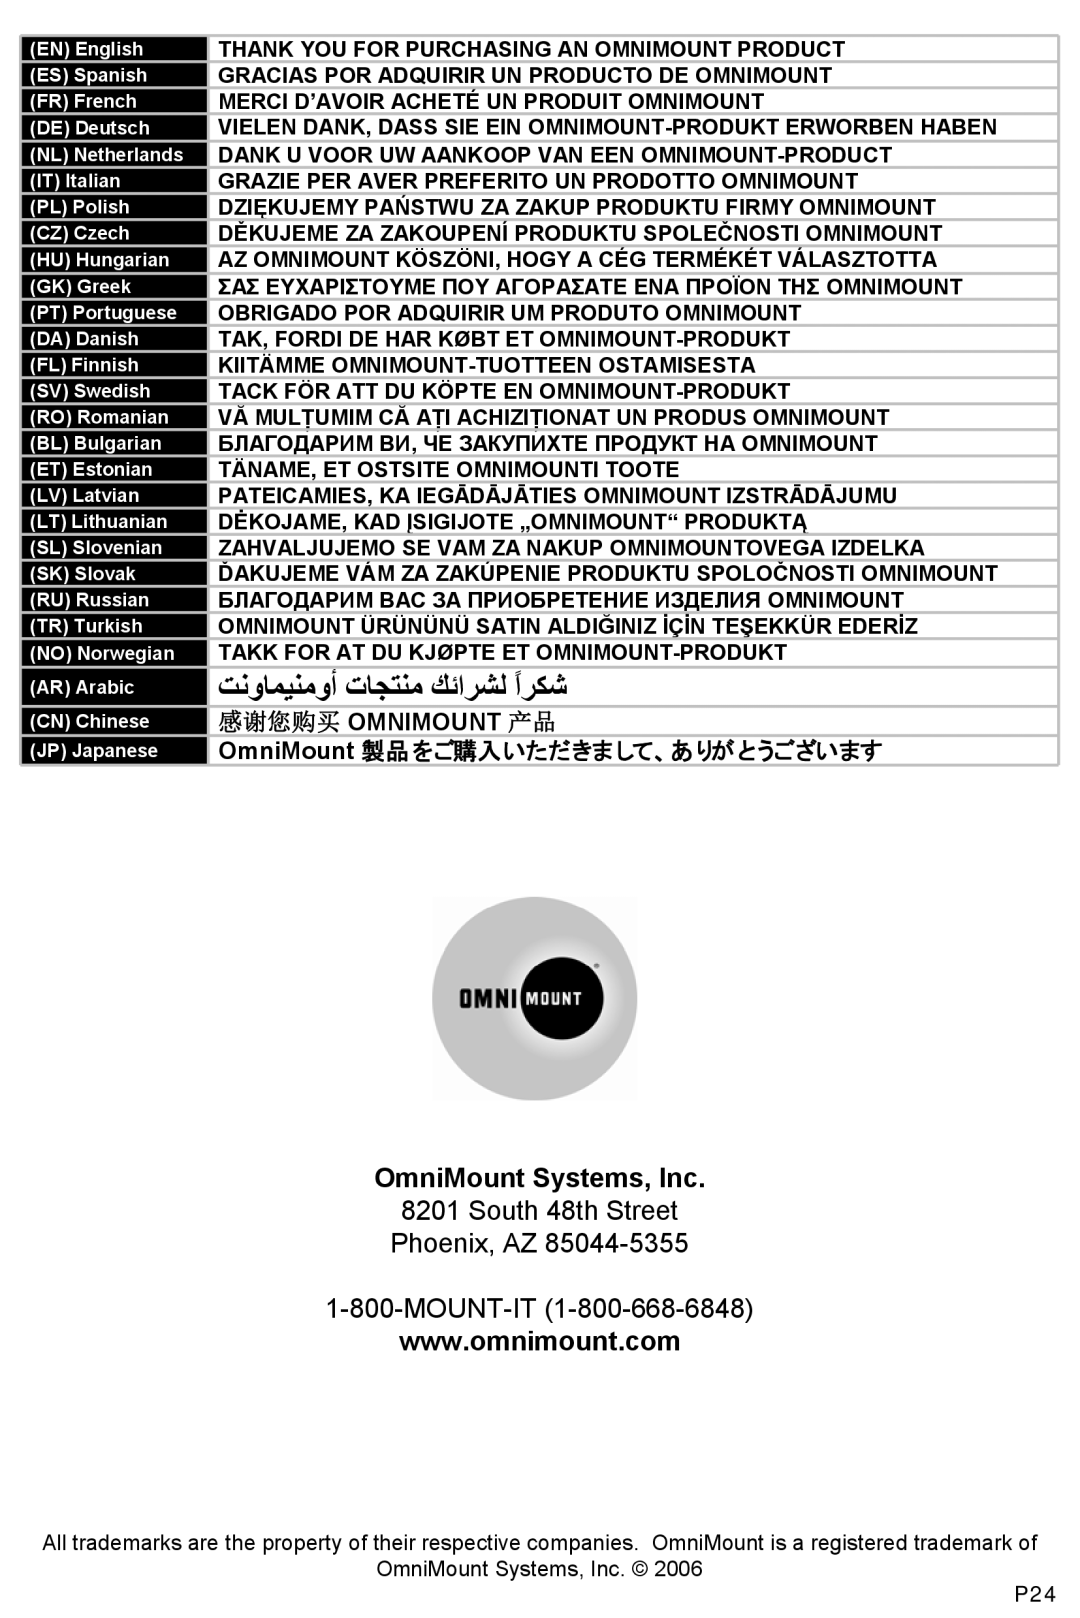 Omnimount 10270, ECHOA3 instruction manual OmniMount Systems, Inc, ﺖﻧوﺎﻤﻴﻨﻣوأ تﺎﺠﺘﻨﻣ ﻚﺋاﺮﺸﻟ اﺮﻜﺷً, 感谢您购买 Omnimount 产品 